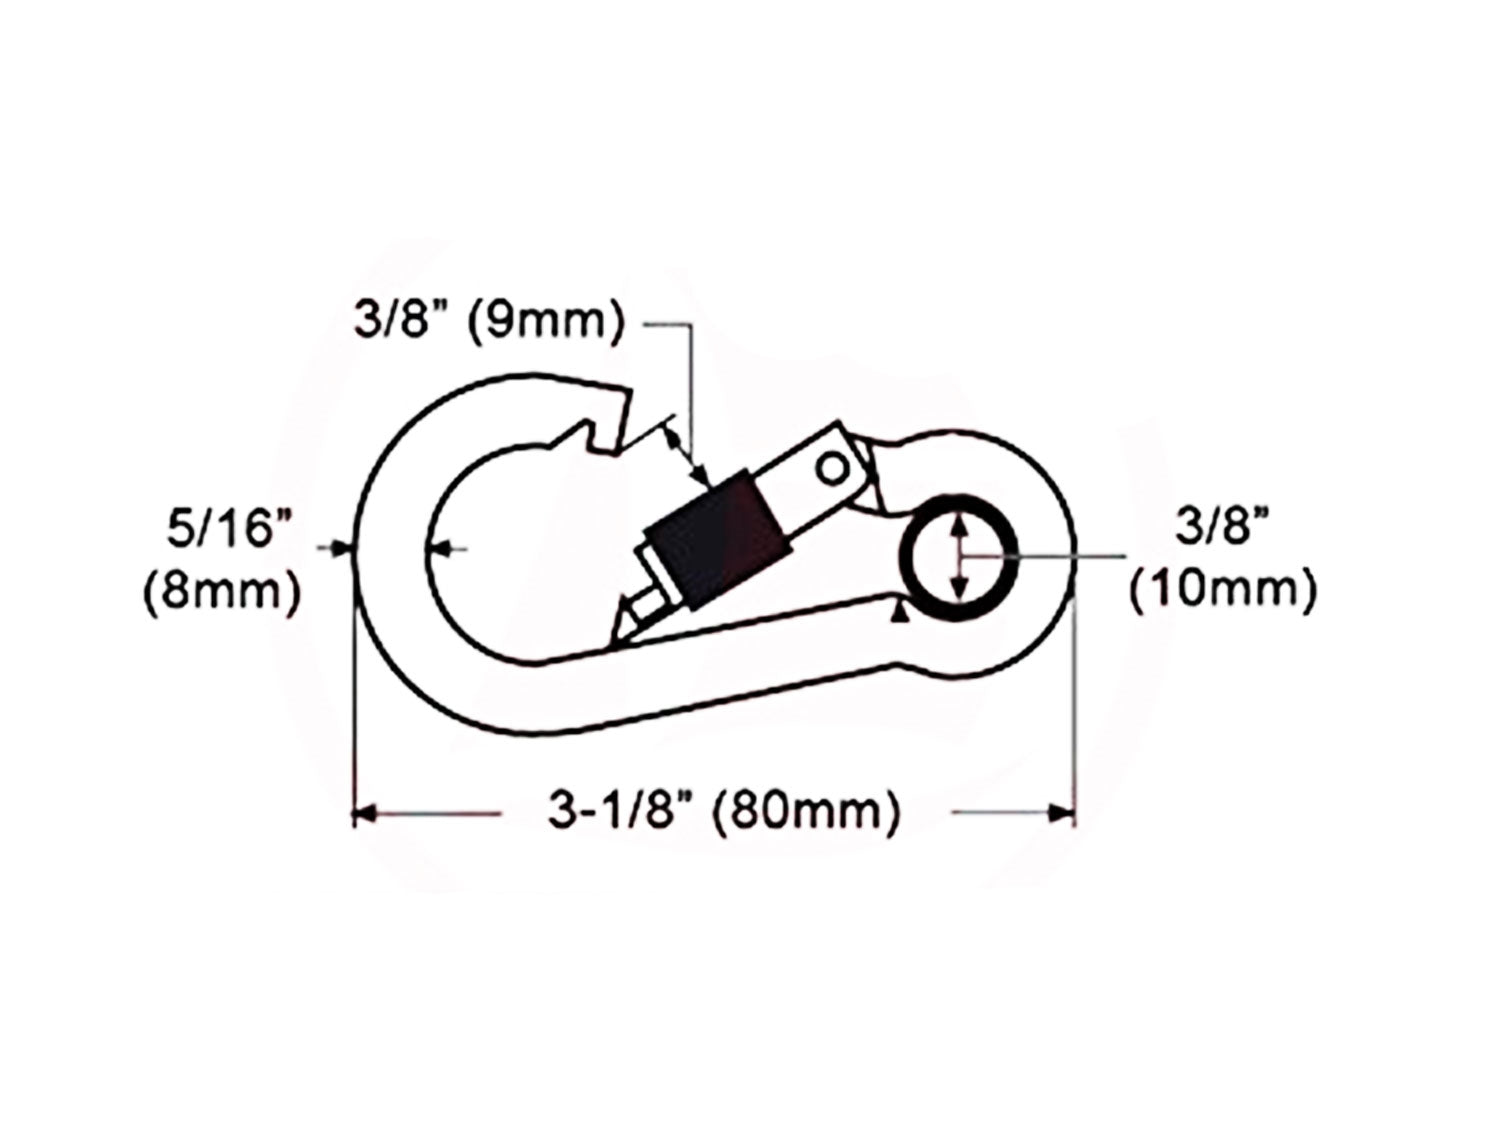 Snap Hook with Thimble Eye & Barrel Lock, 3-1/8" - FO455-M2